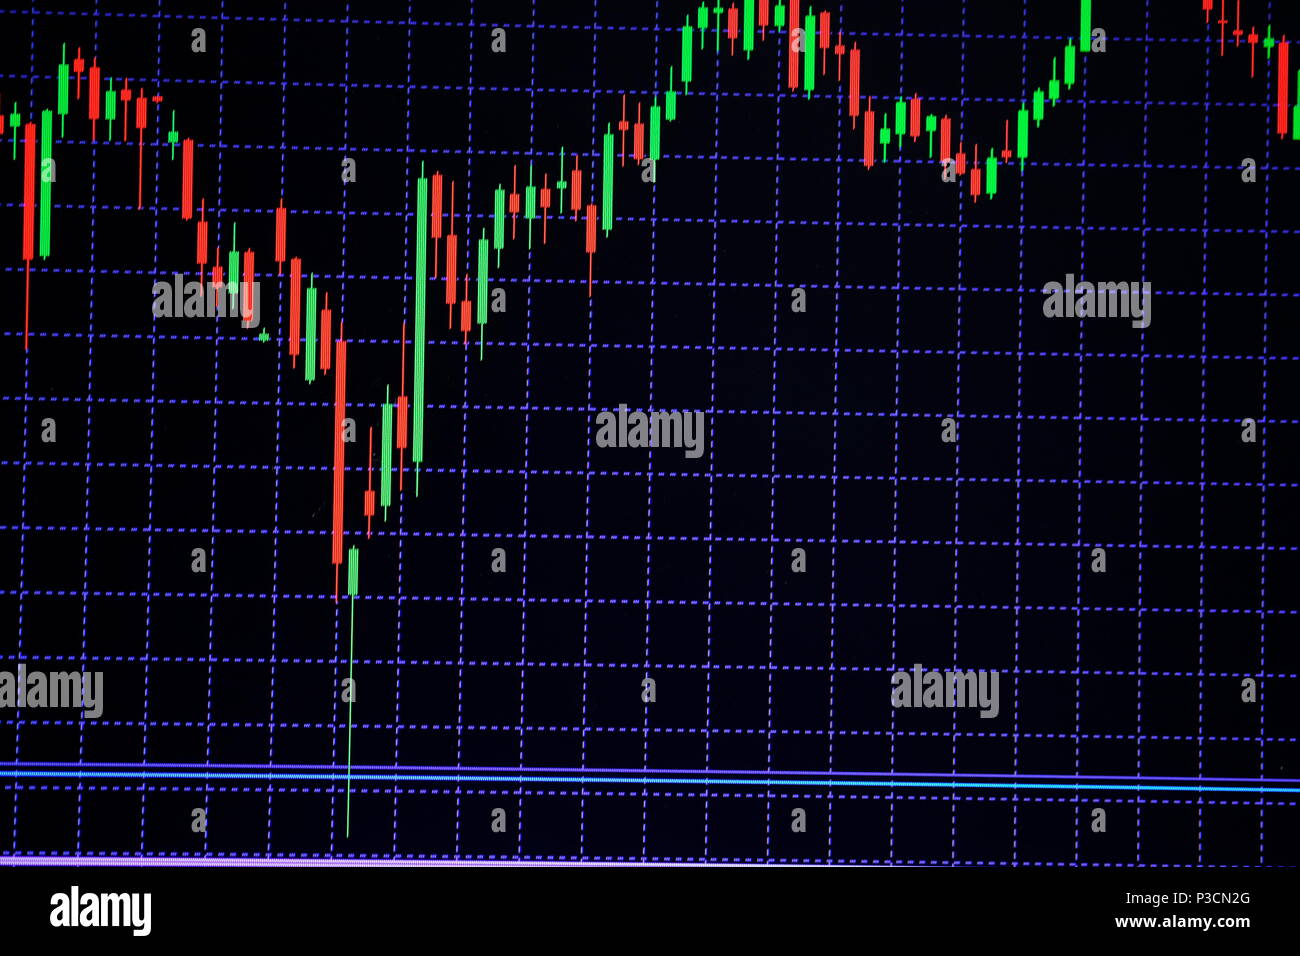 Cn Stock Chart